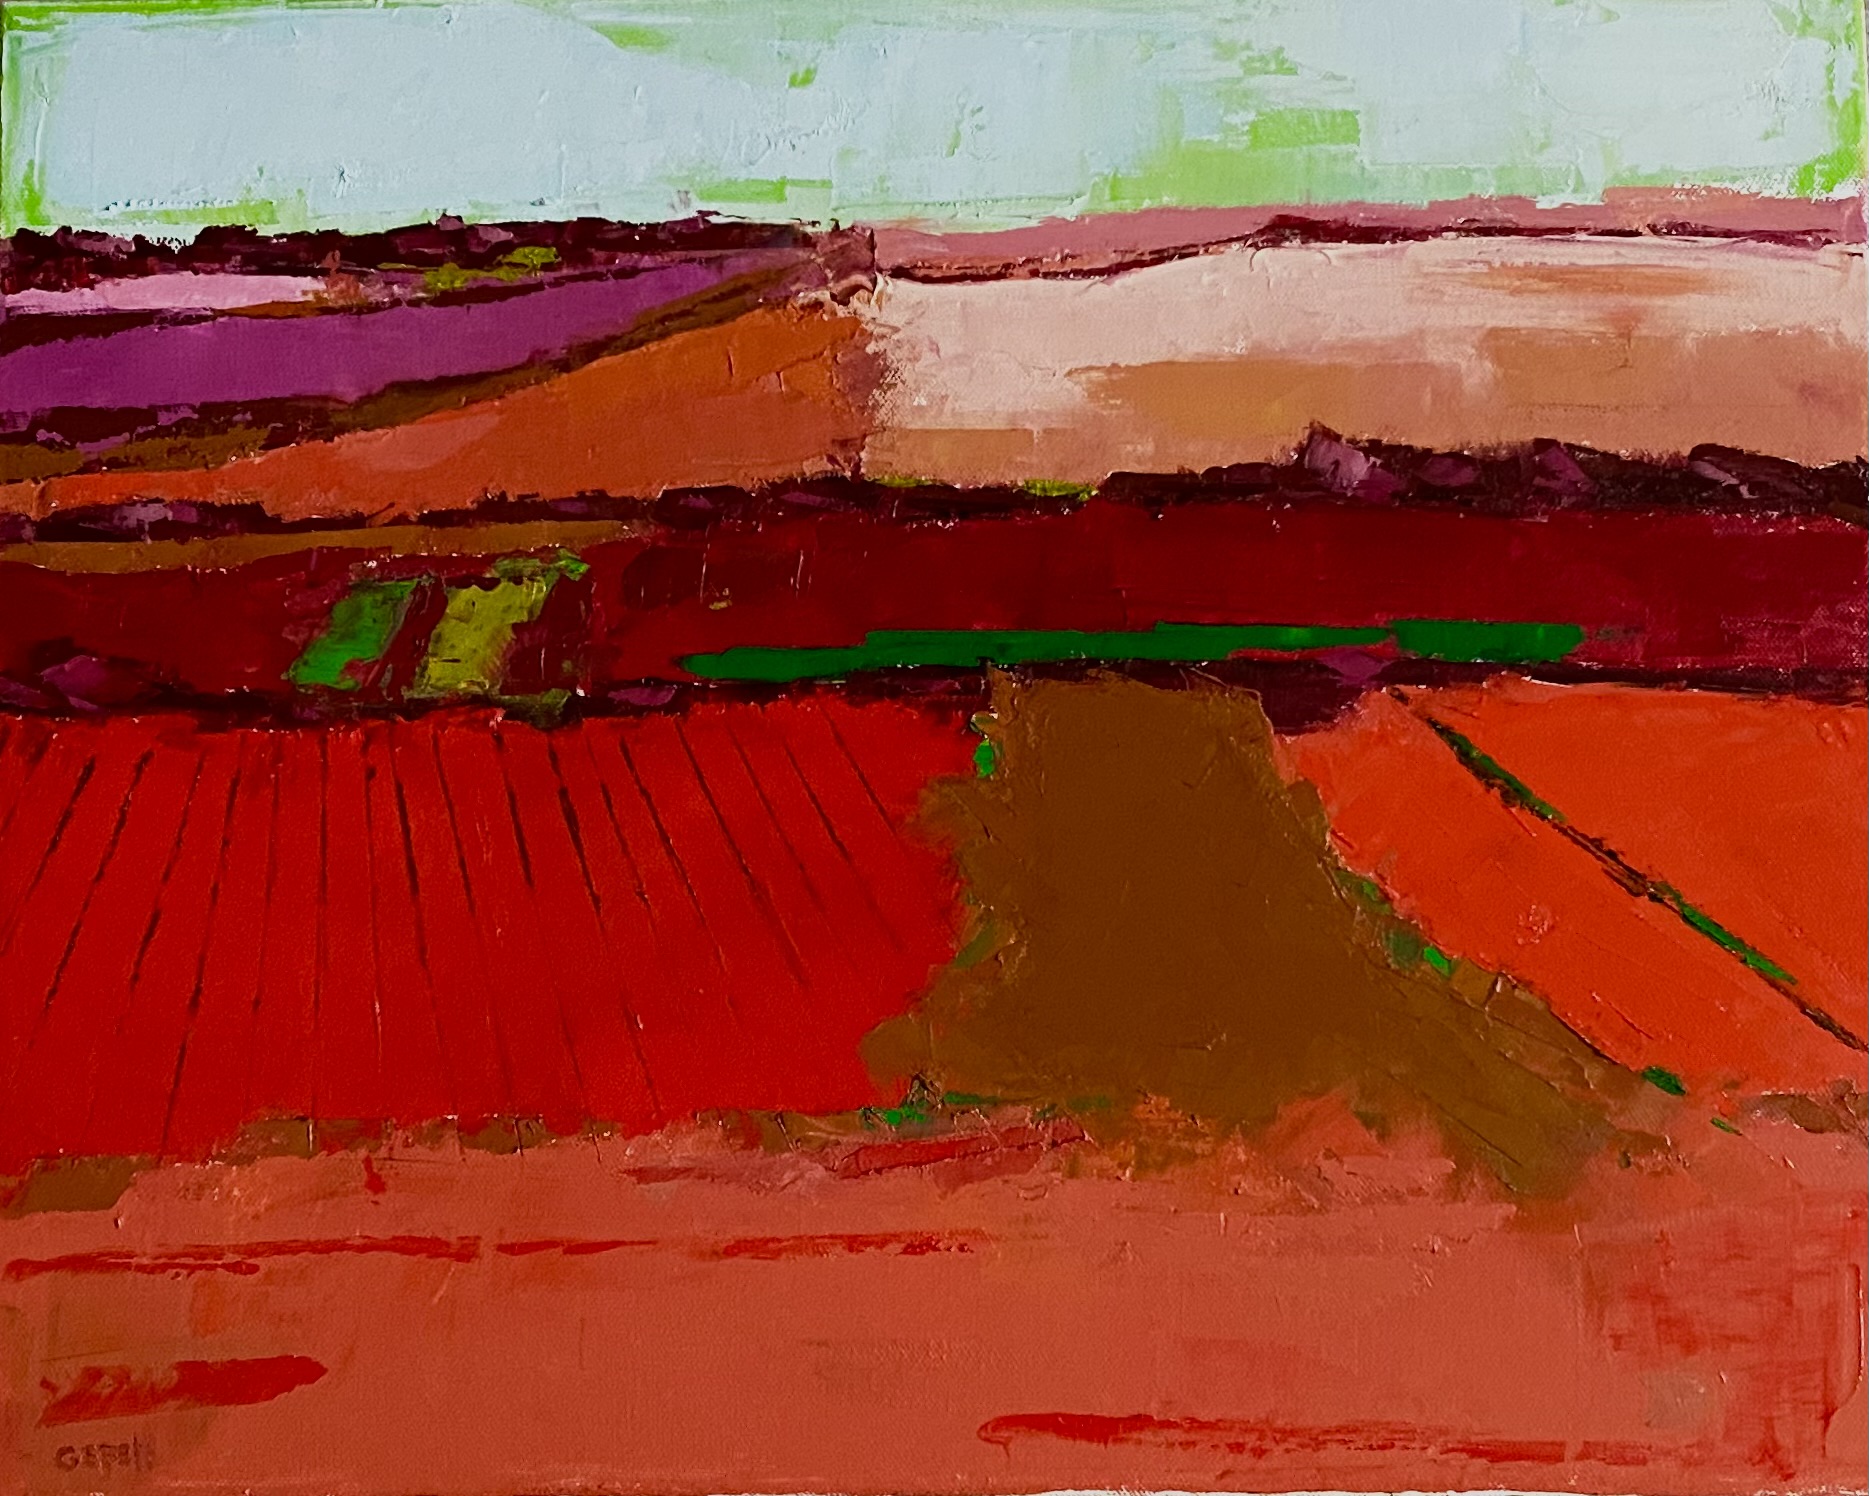 Red Landscape (oil on canvas) by artist Kathleen Gefell